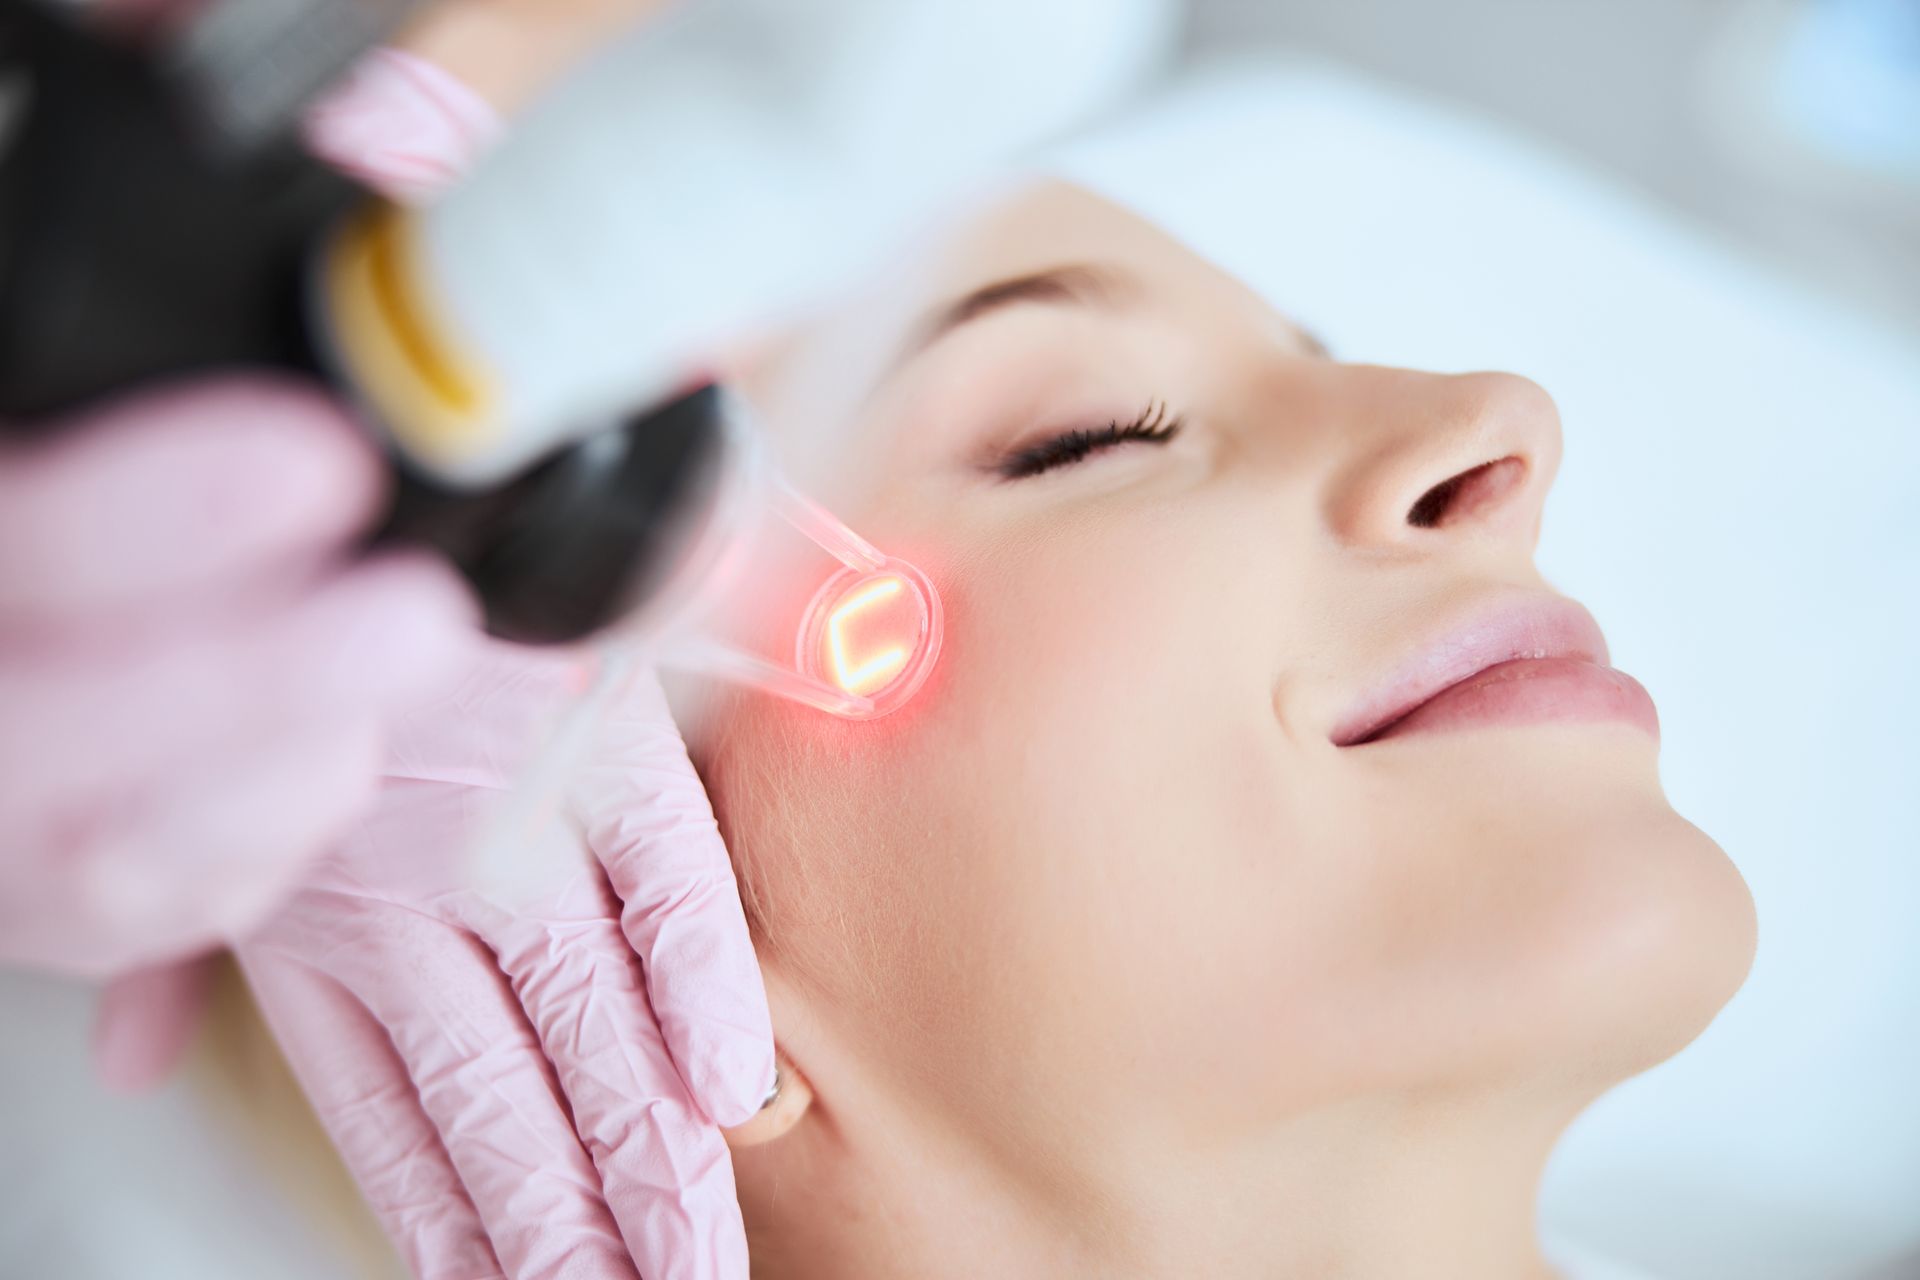 A woman getting laser skin treatment.